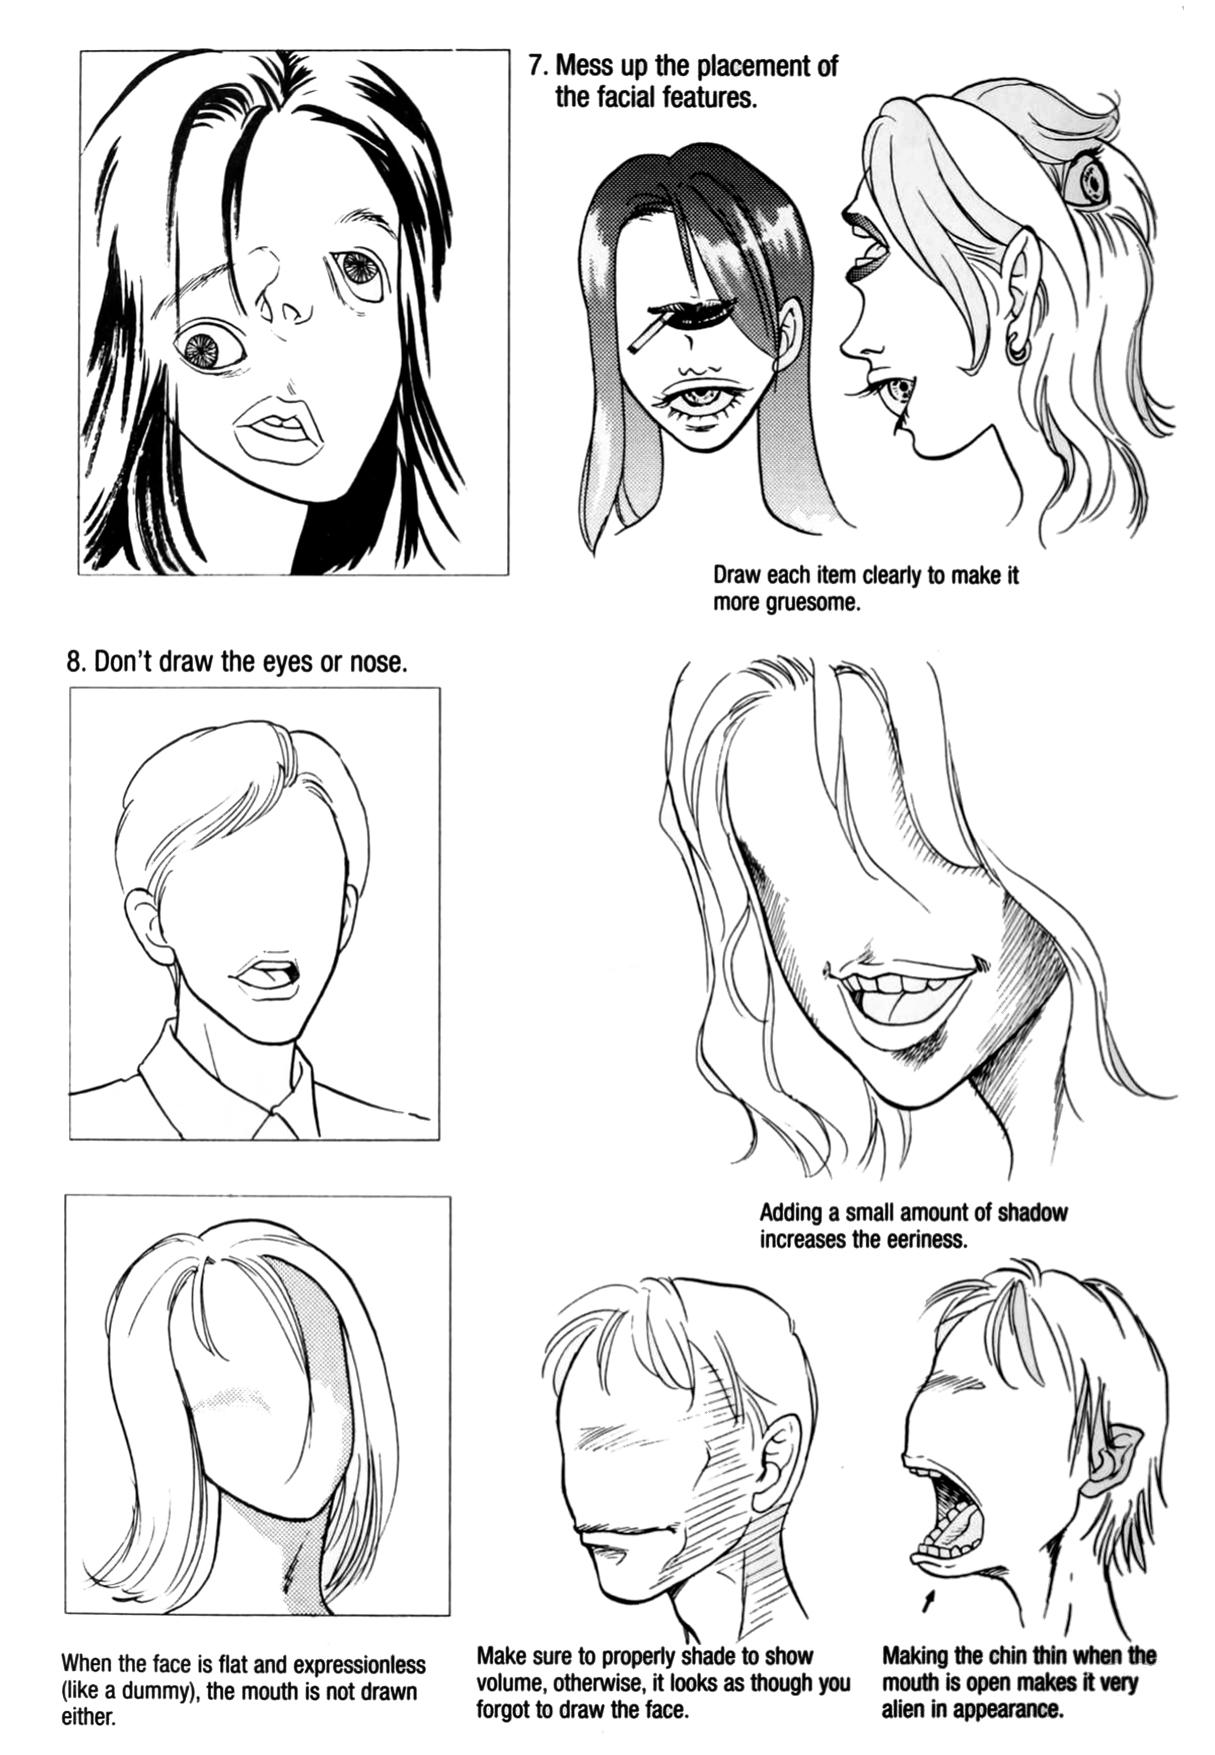 How to Draw Manga Vol. 24, Occult & Horror by Hikaru Hayashi 17